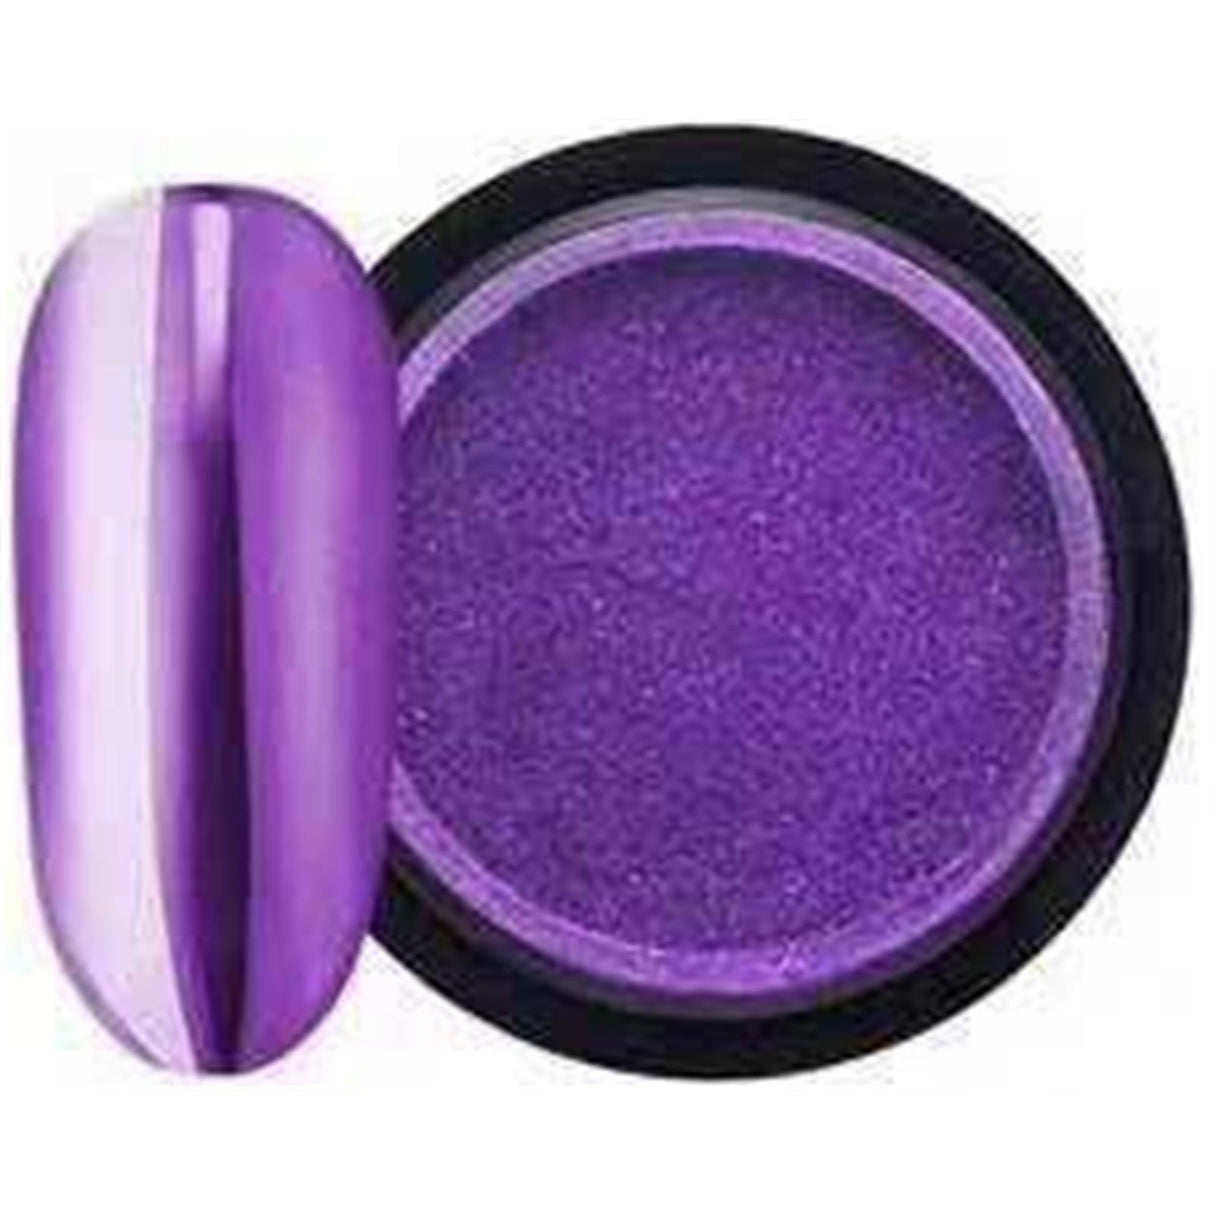 Pigment Chrome lila - MSE - The Beauty Company